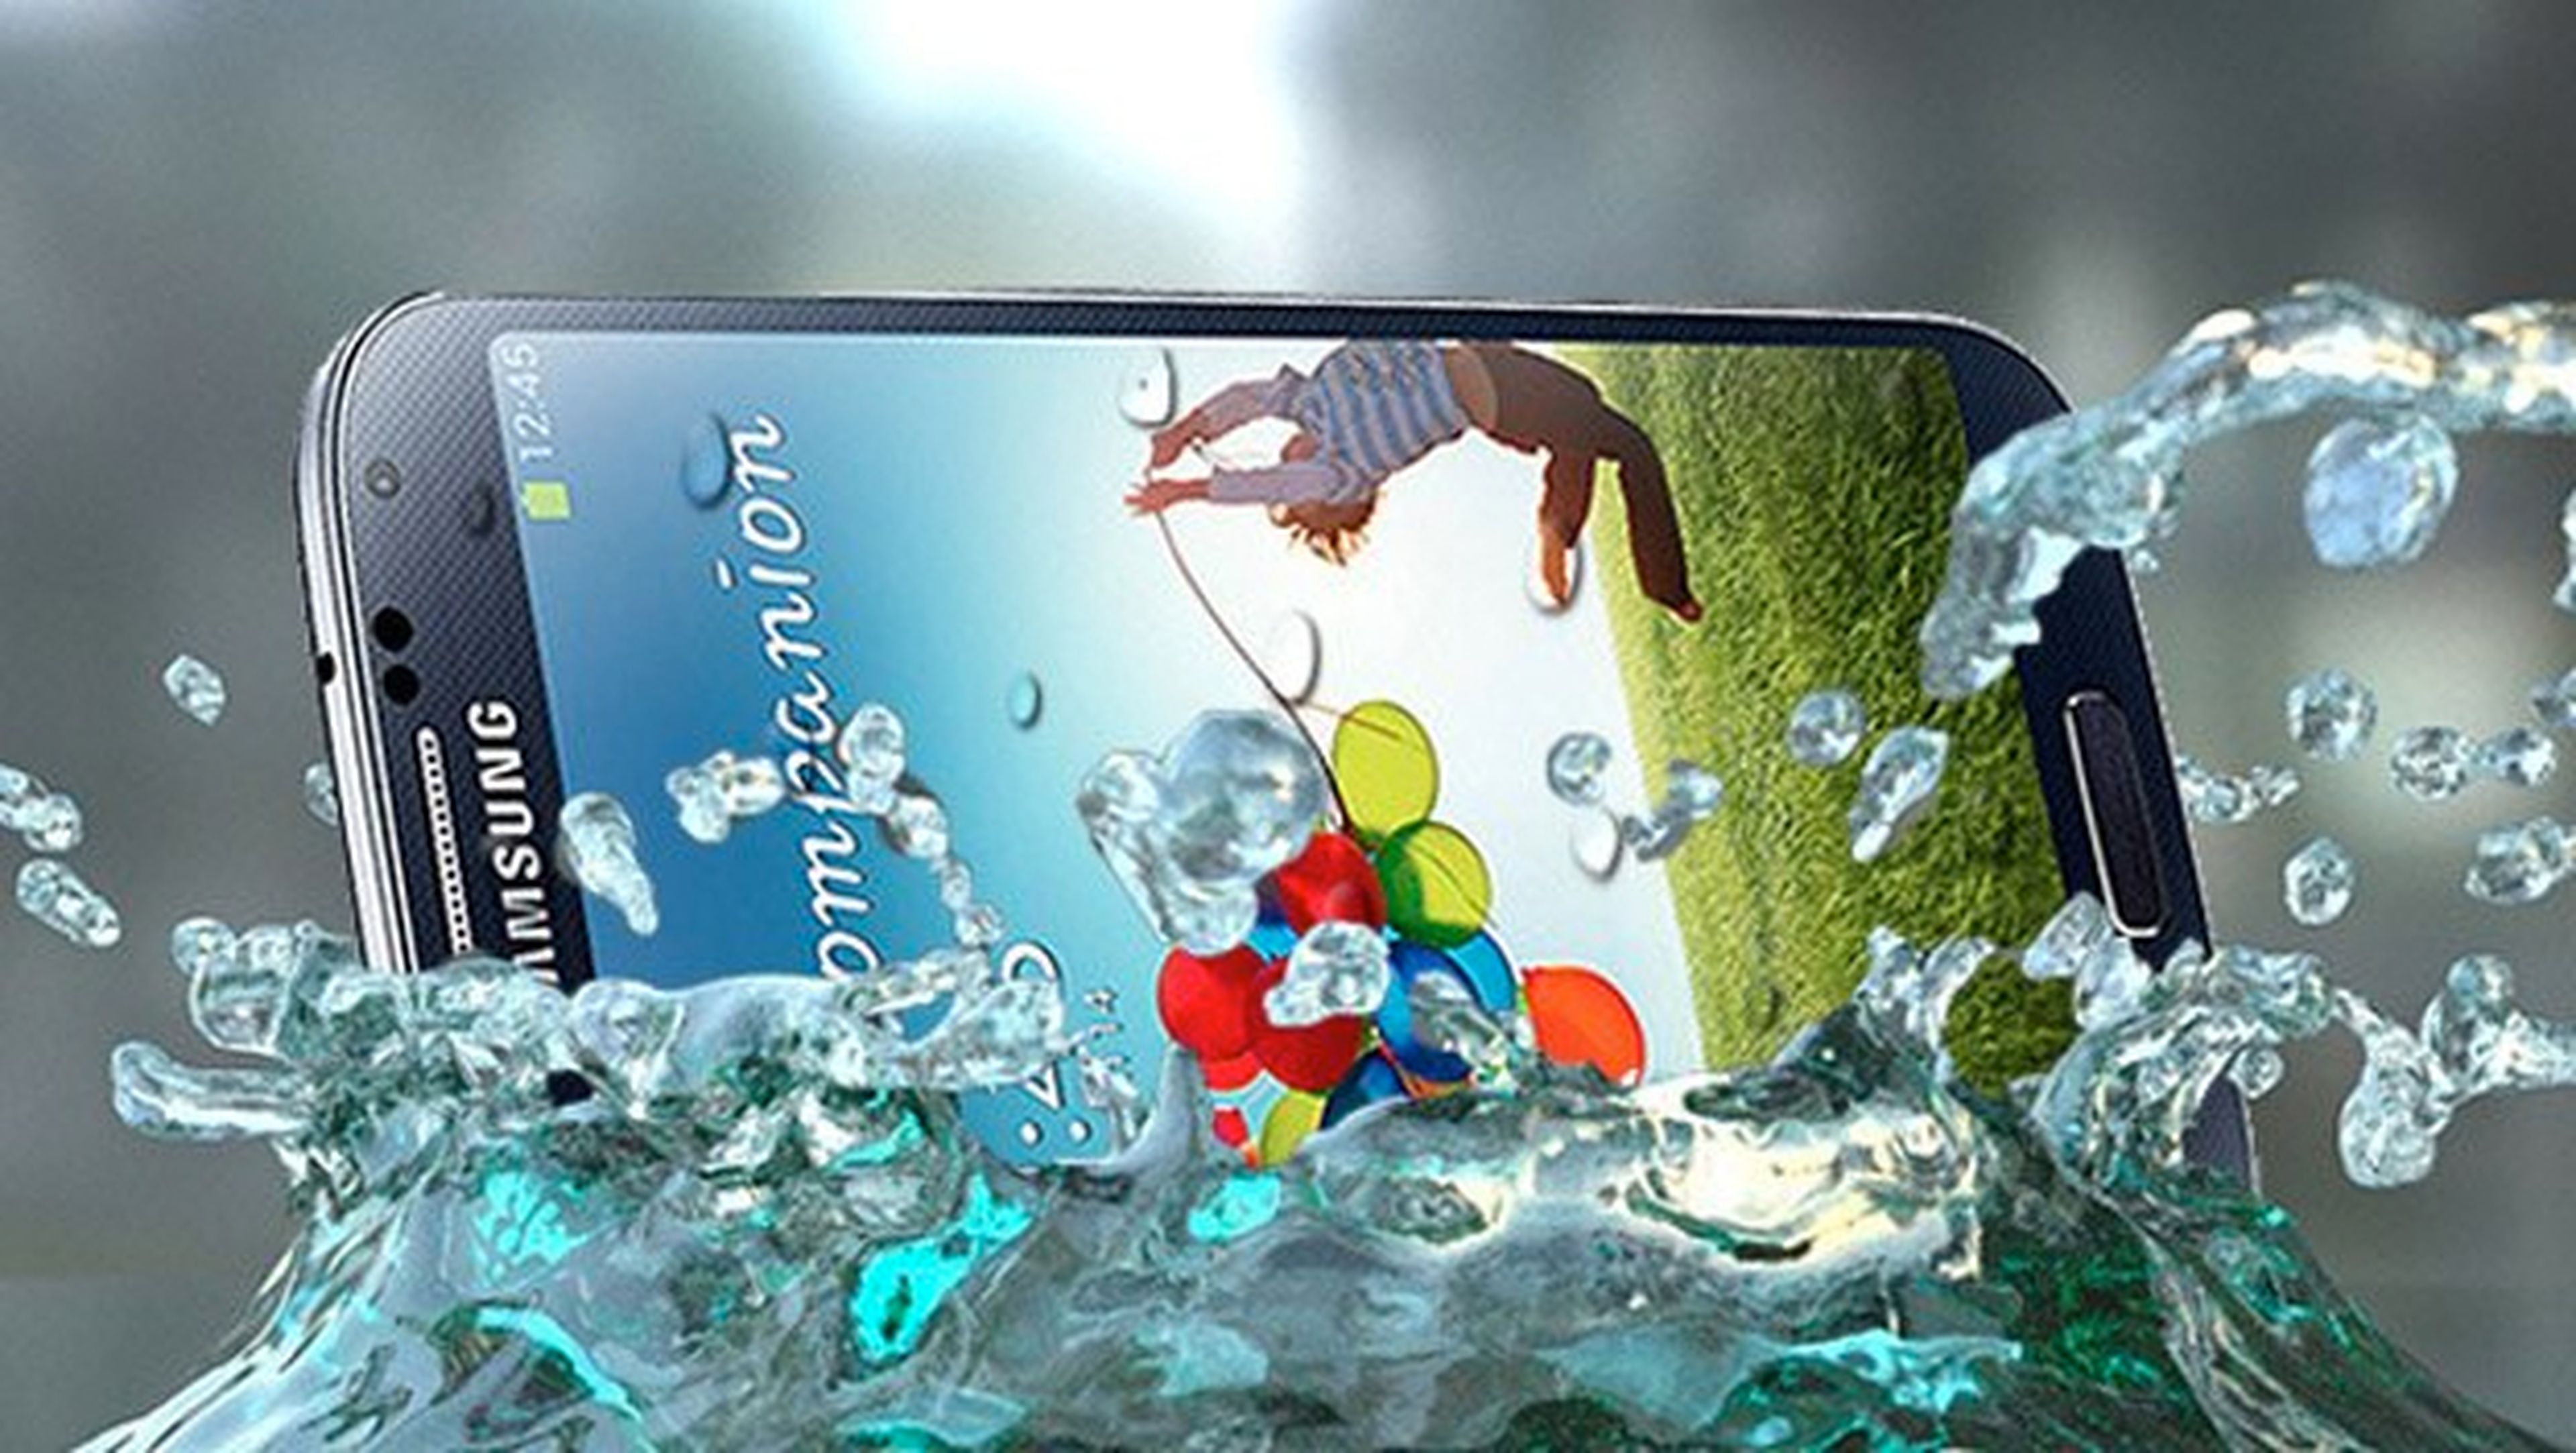 Samsung Galaxy S5 Active, se filtran características en Antutu